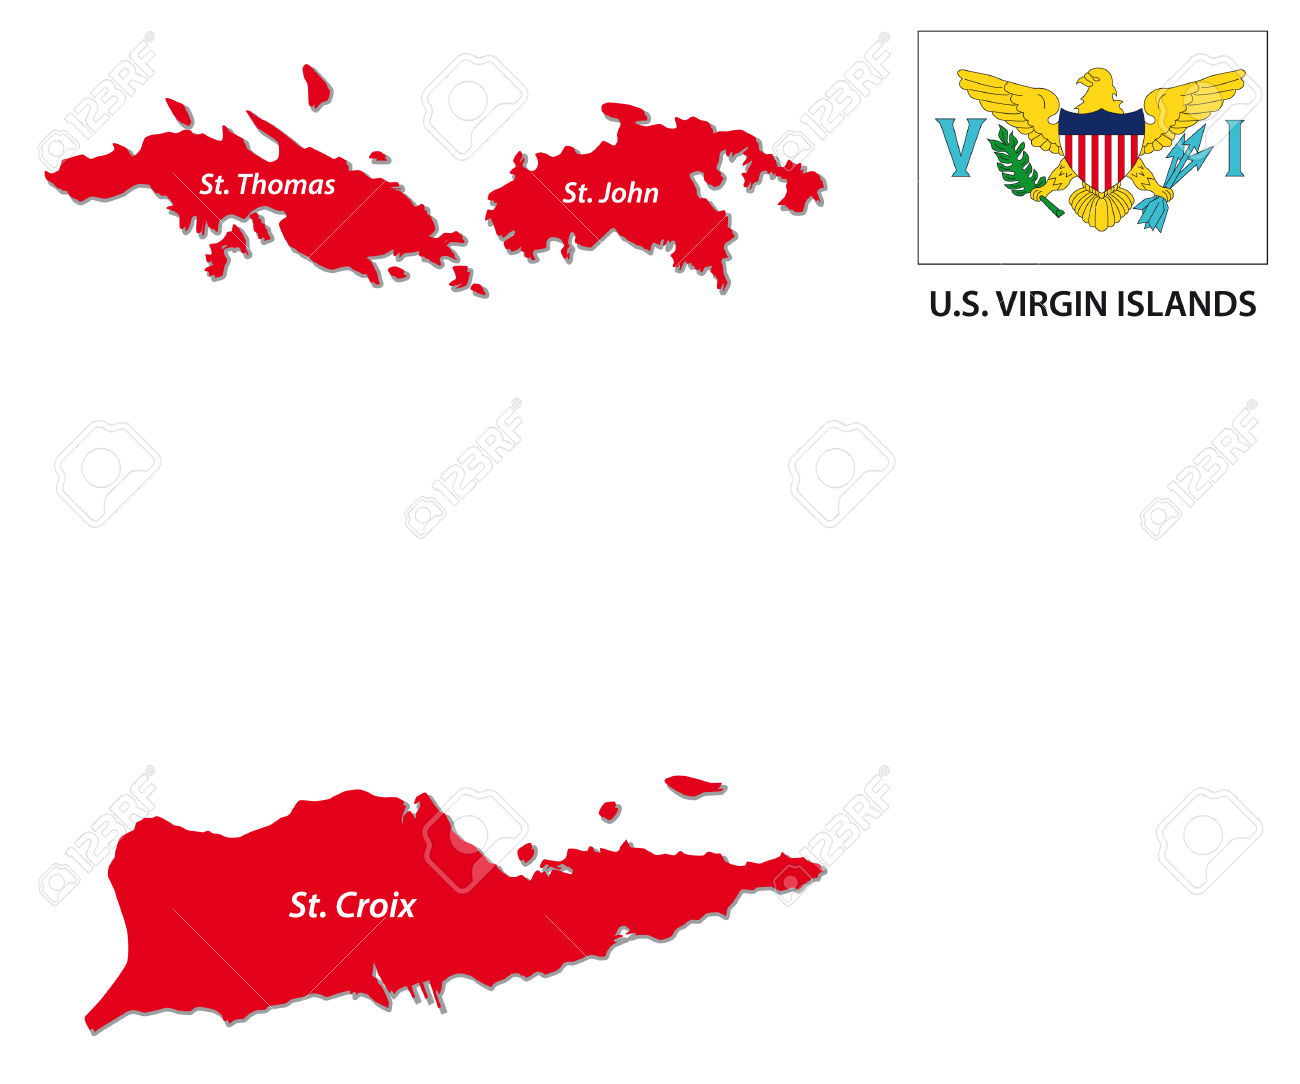 Virgin Islands clipart #15, Download drawings